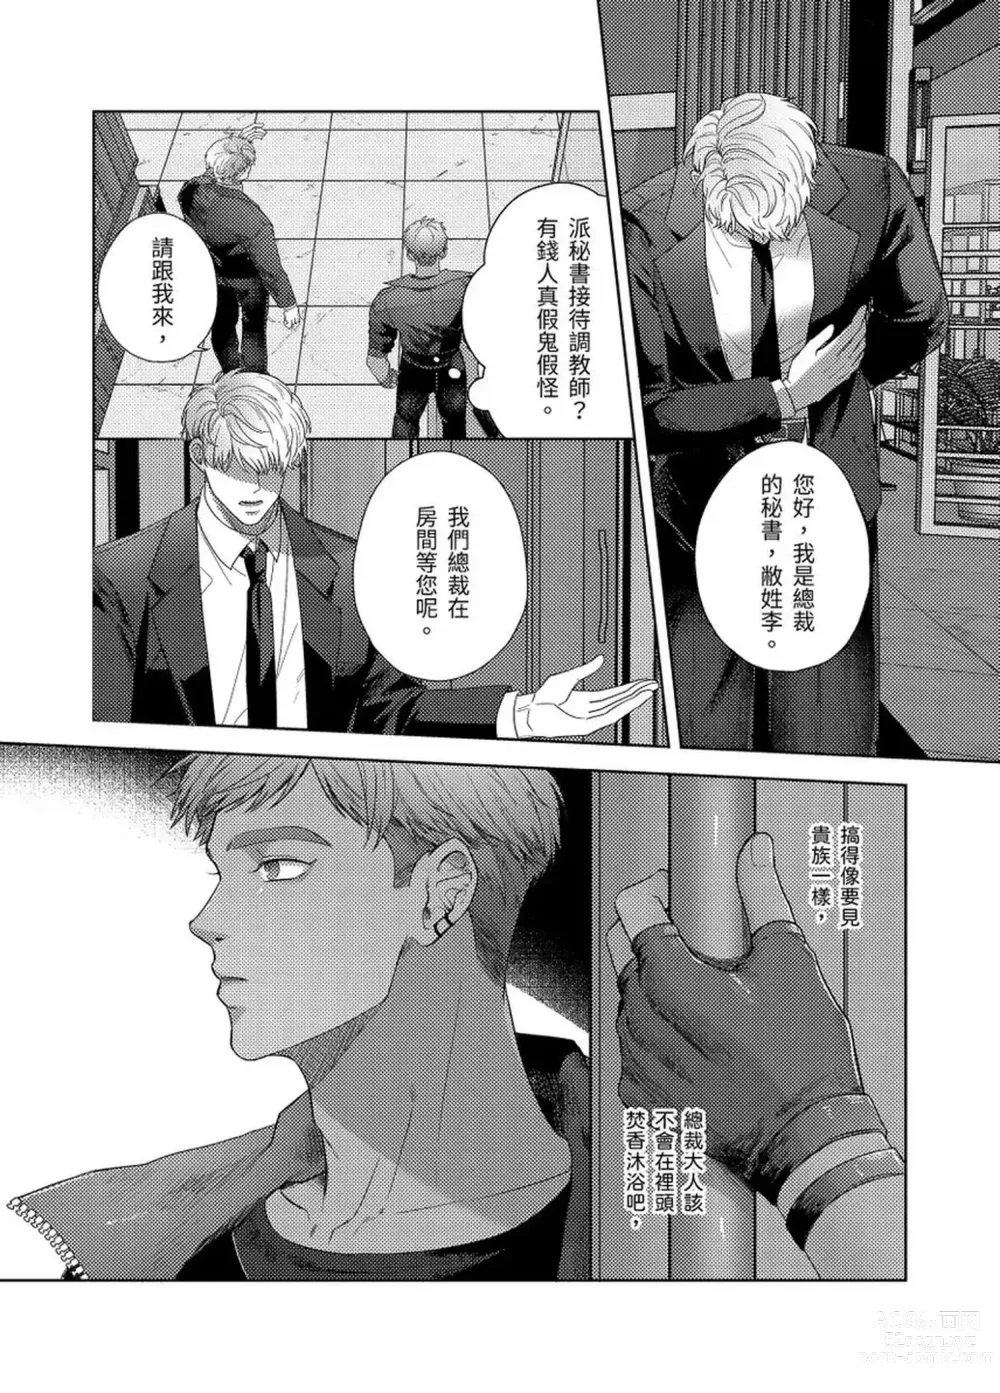 Page 5 of manga Dom&Sub